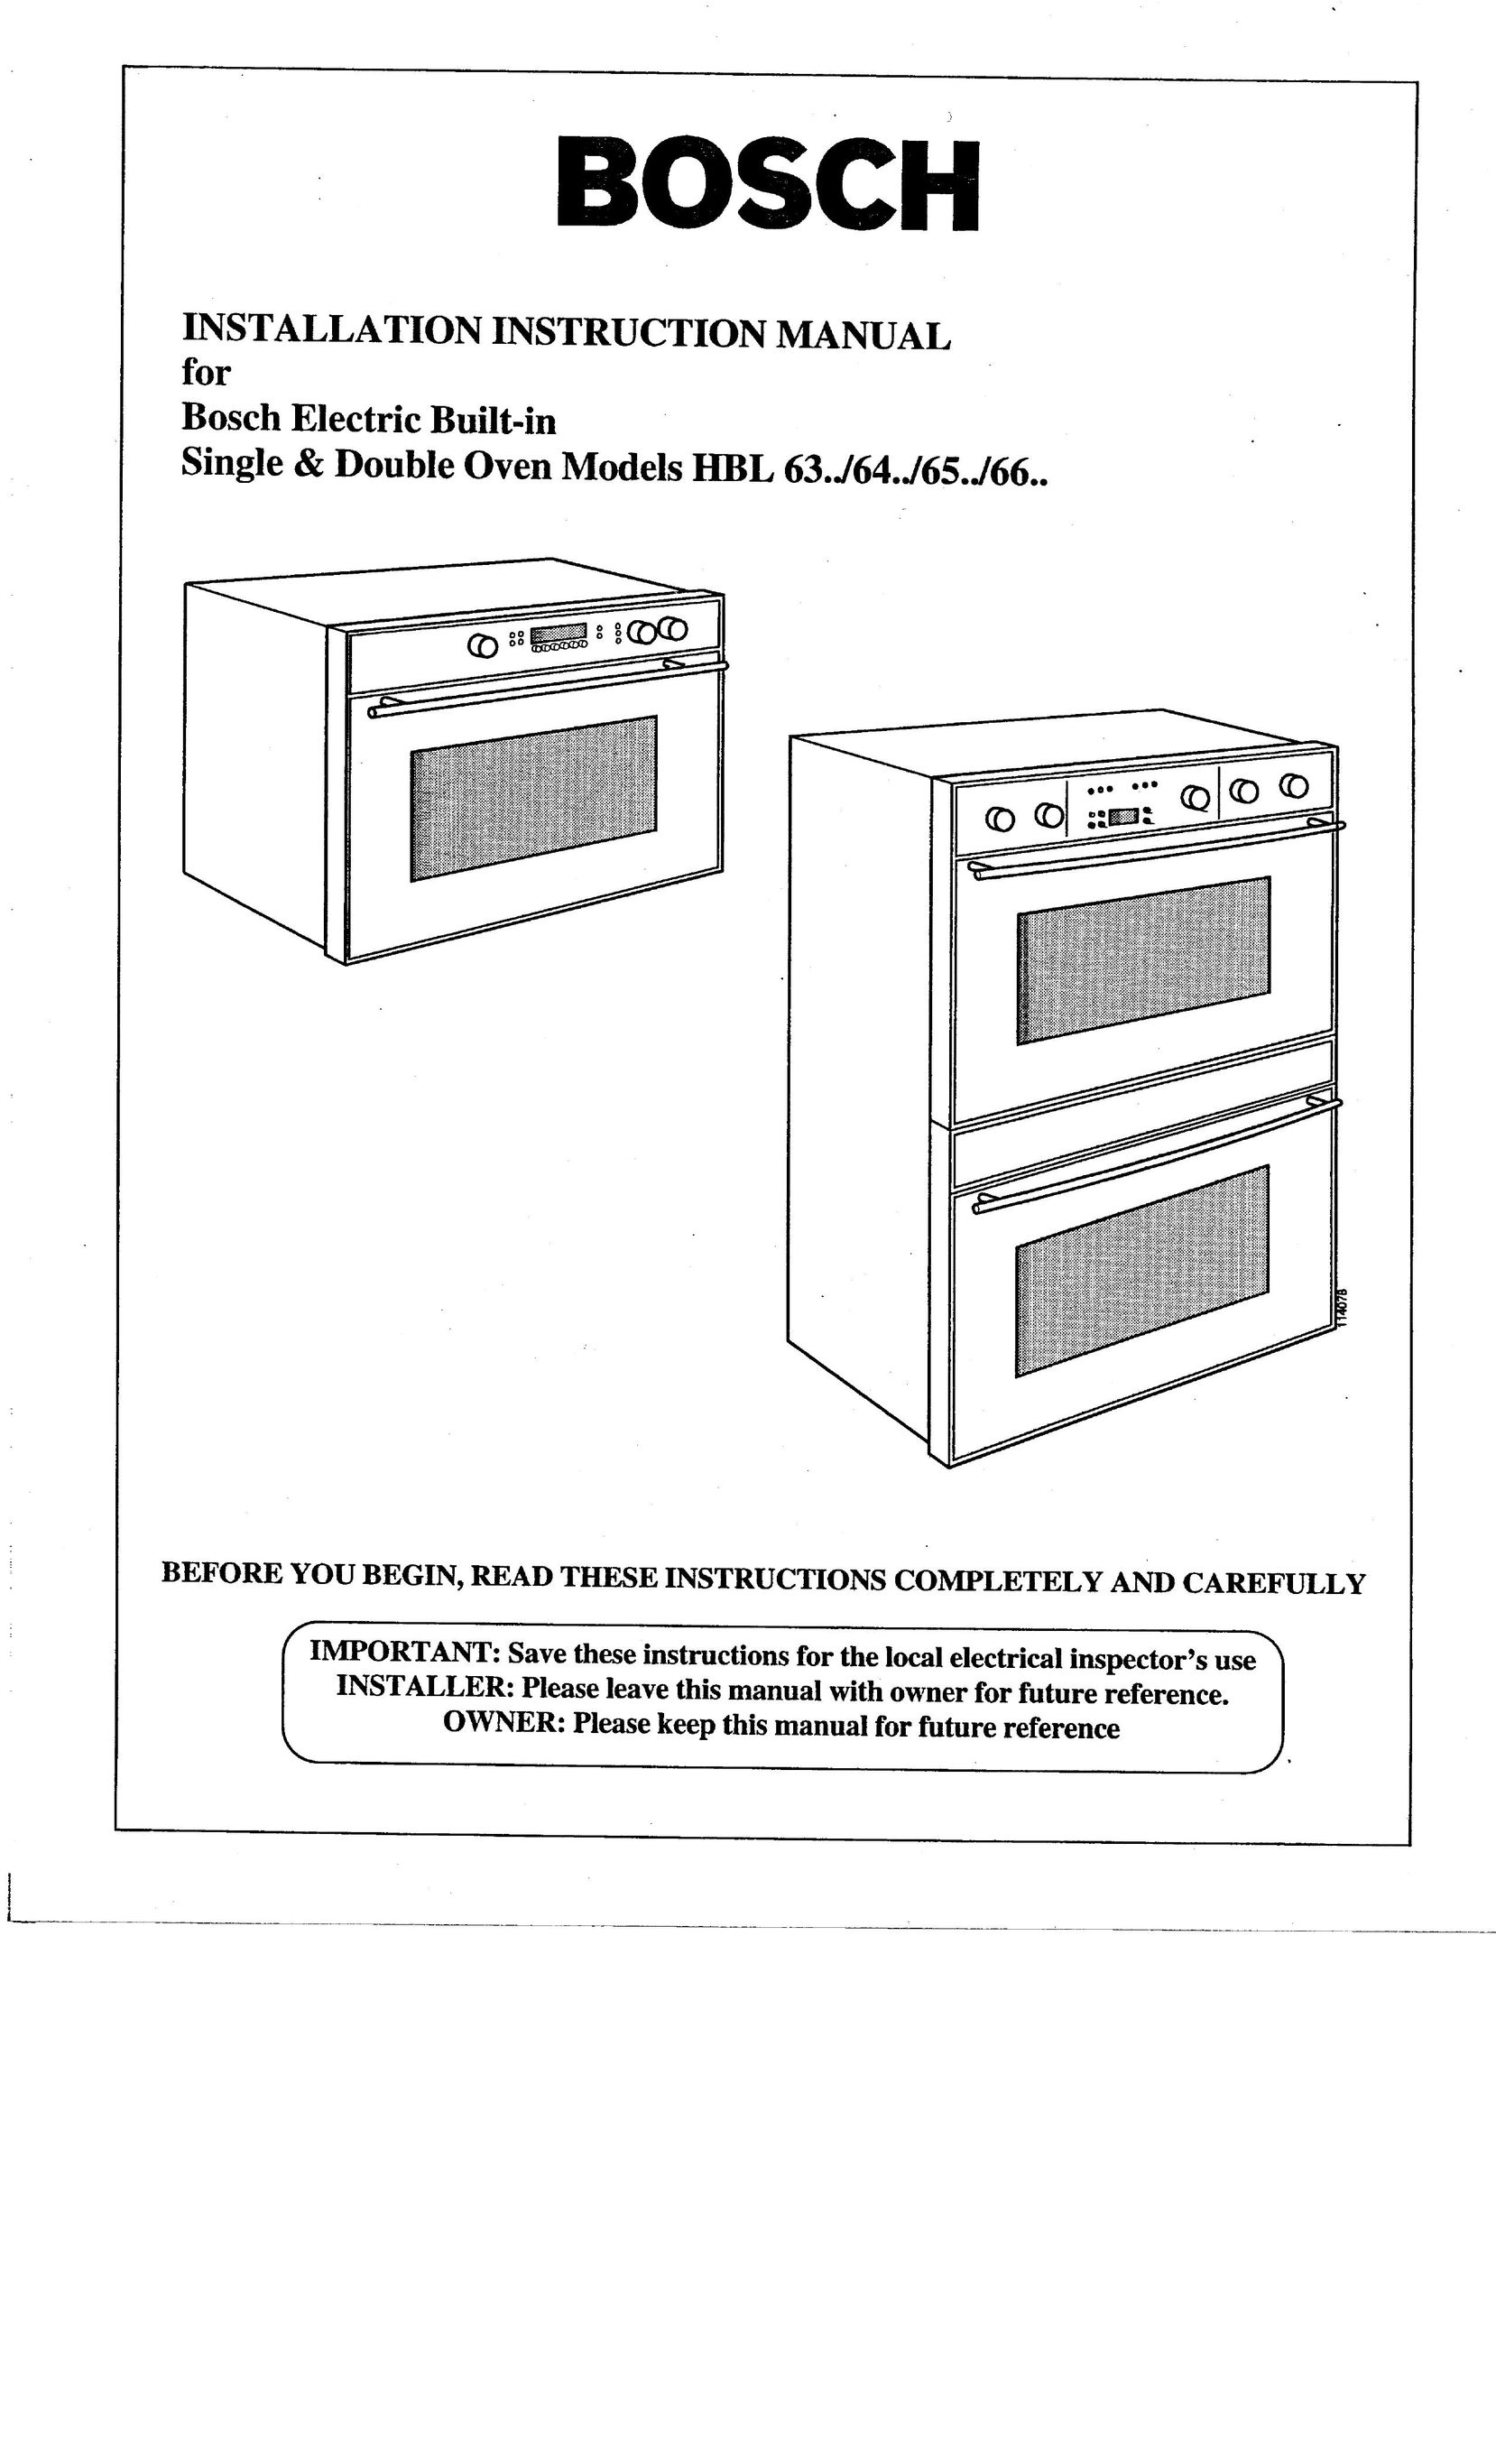 Bosch Appliances HBL 65.. Double Oven User Manual